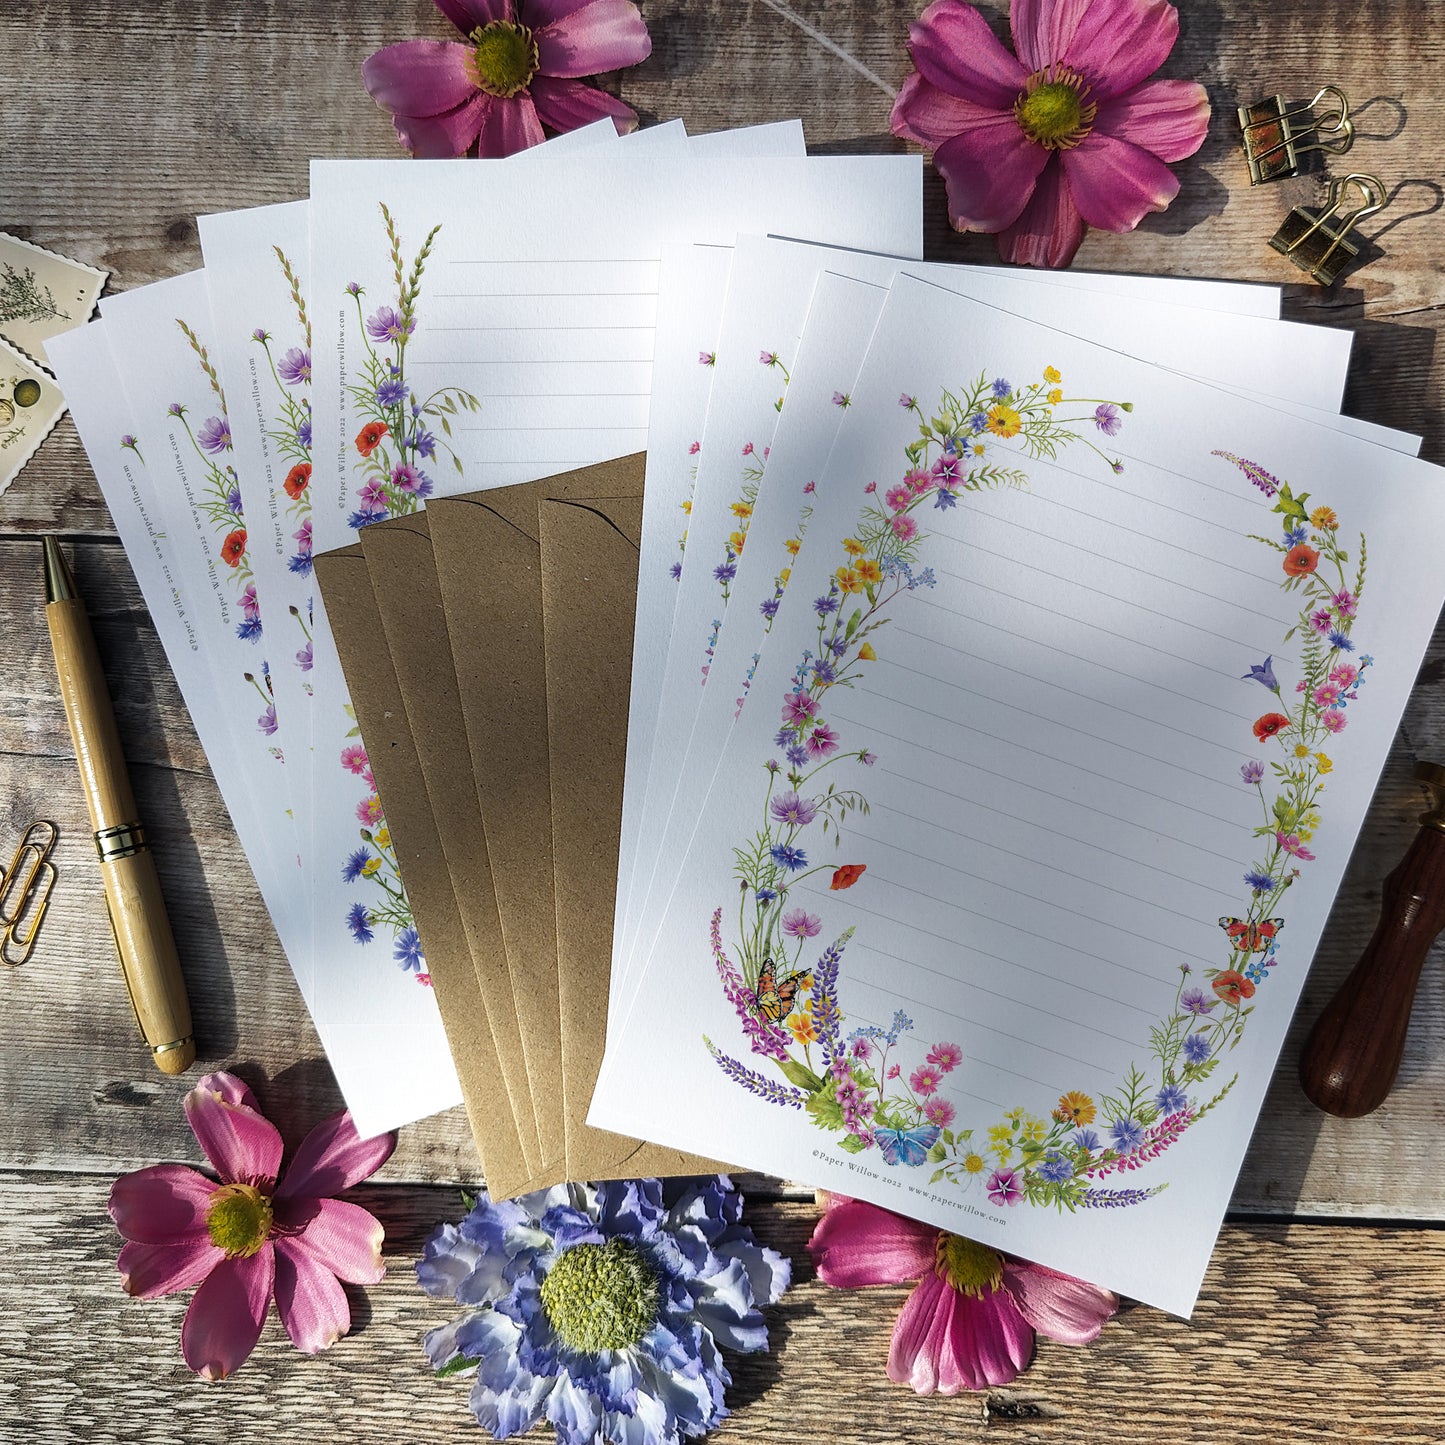 Wildflower Meadow Letter Writing Set